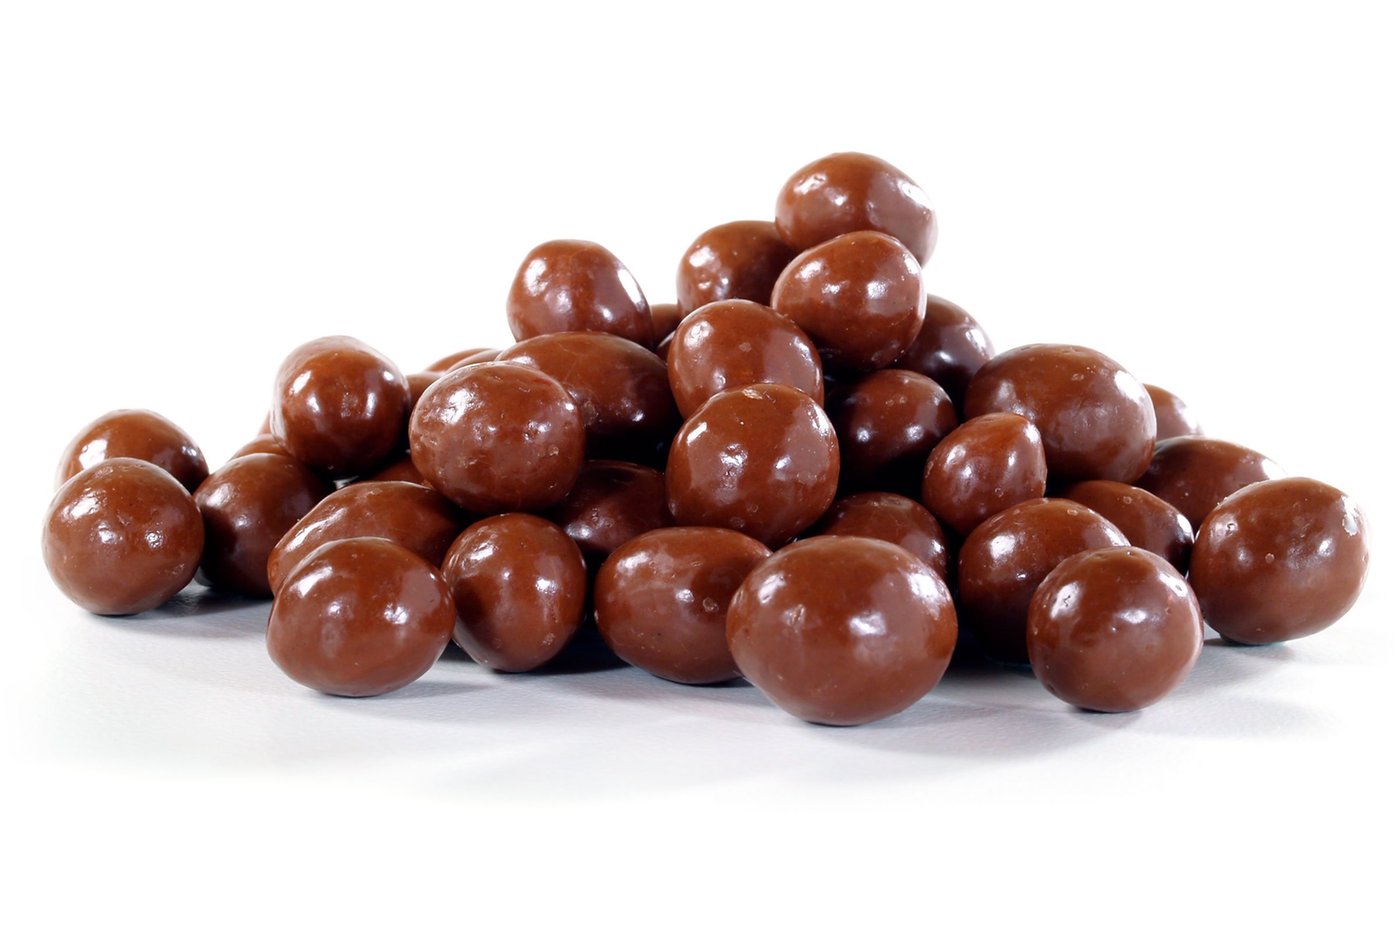 Chocolate Peanuts image zoom